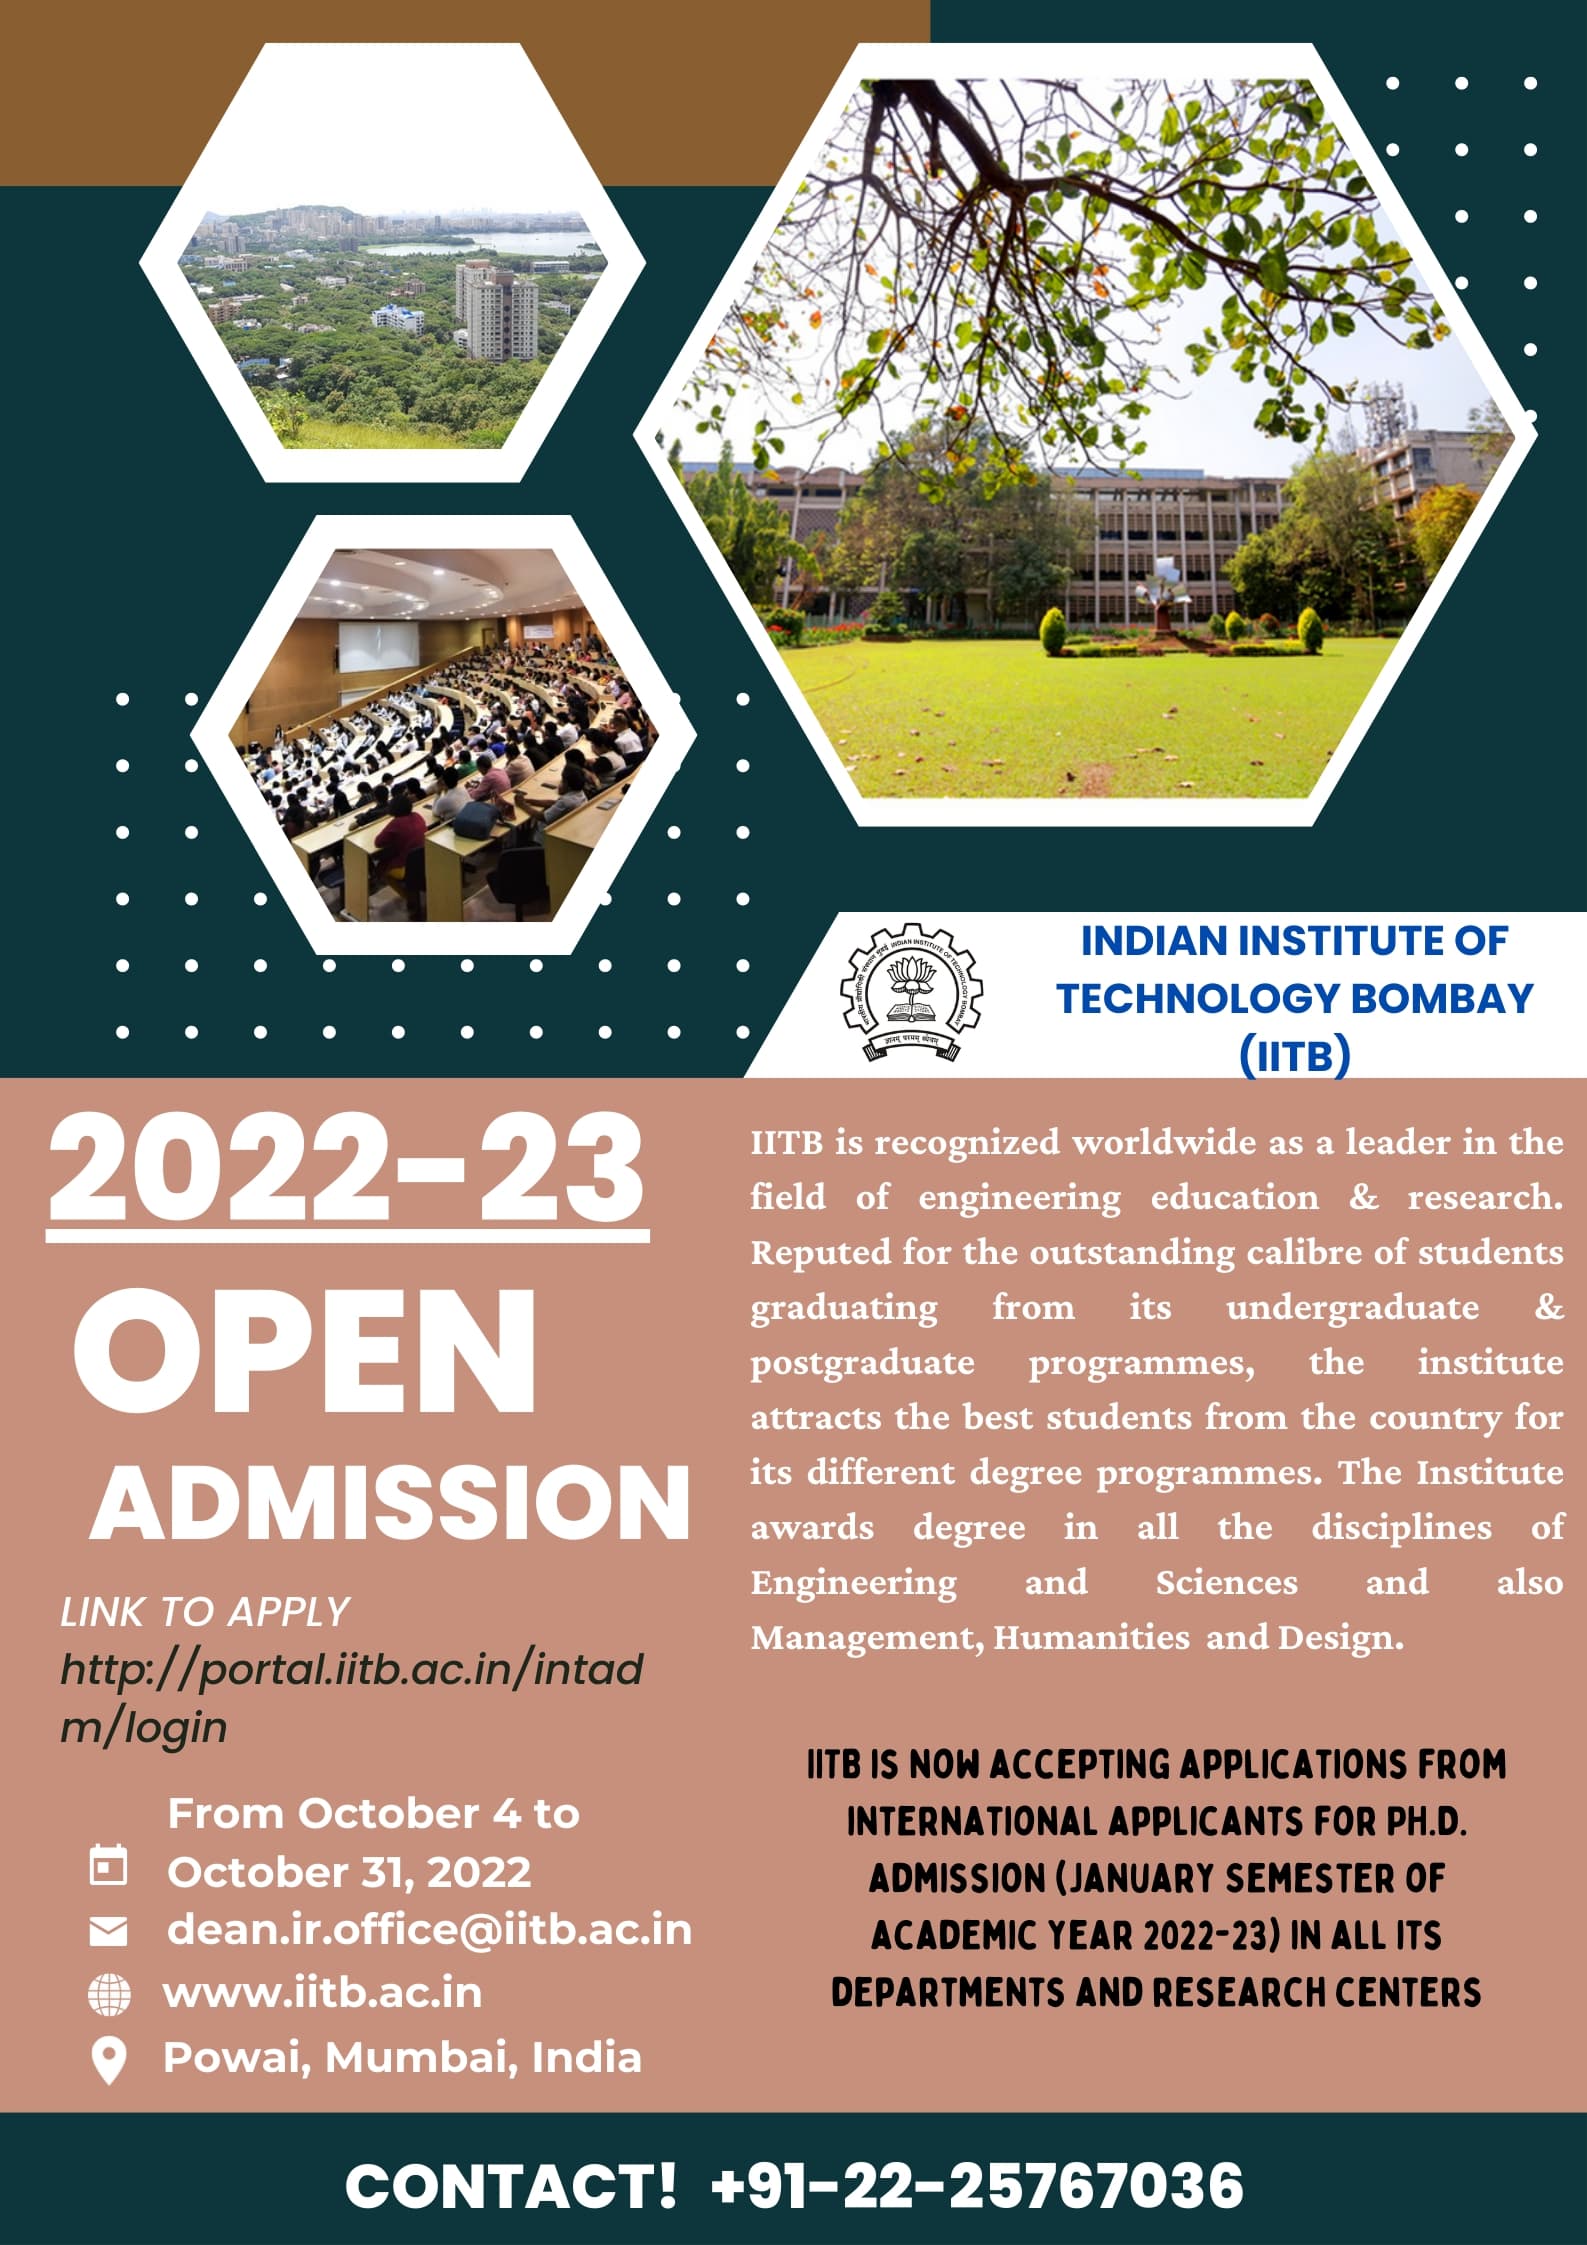 phd admission 2022 23 india